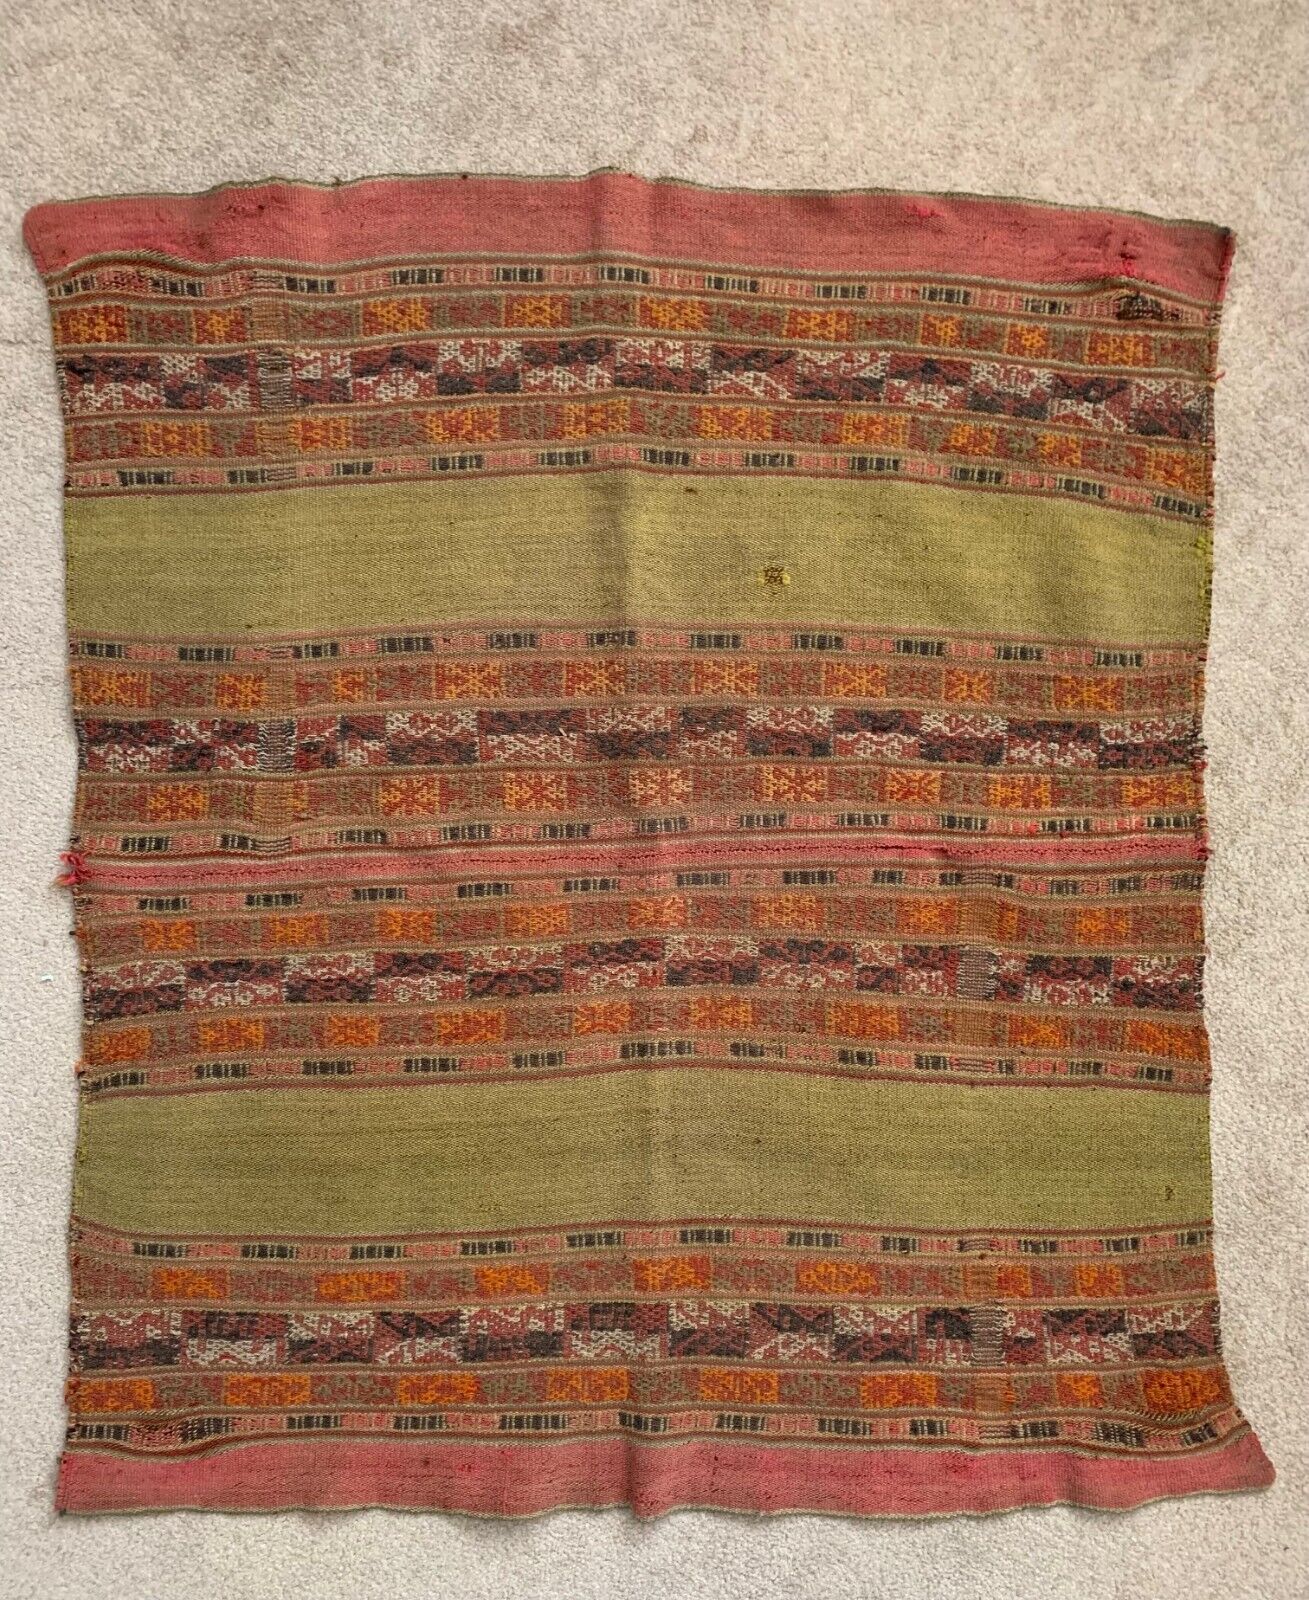 1400-1550 Inka Textile Pre-Columbian Andean Cameloid Lliklla Lliqlla Provenance